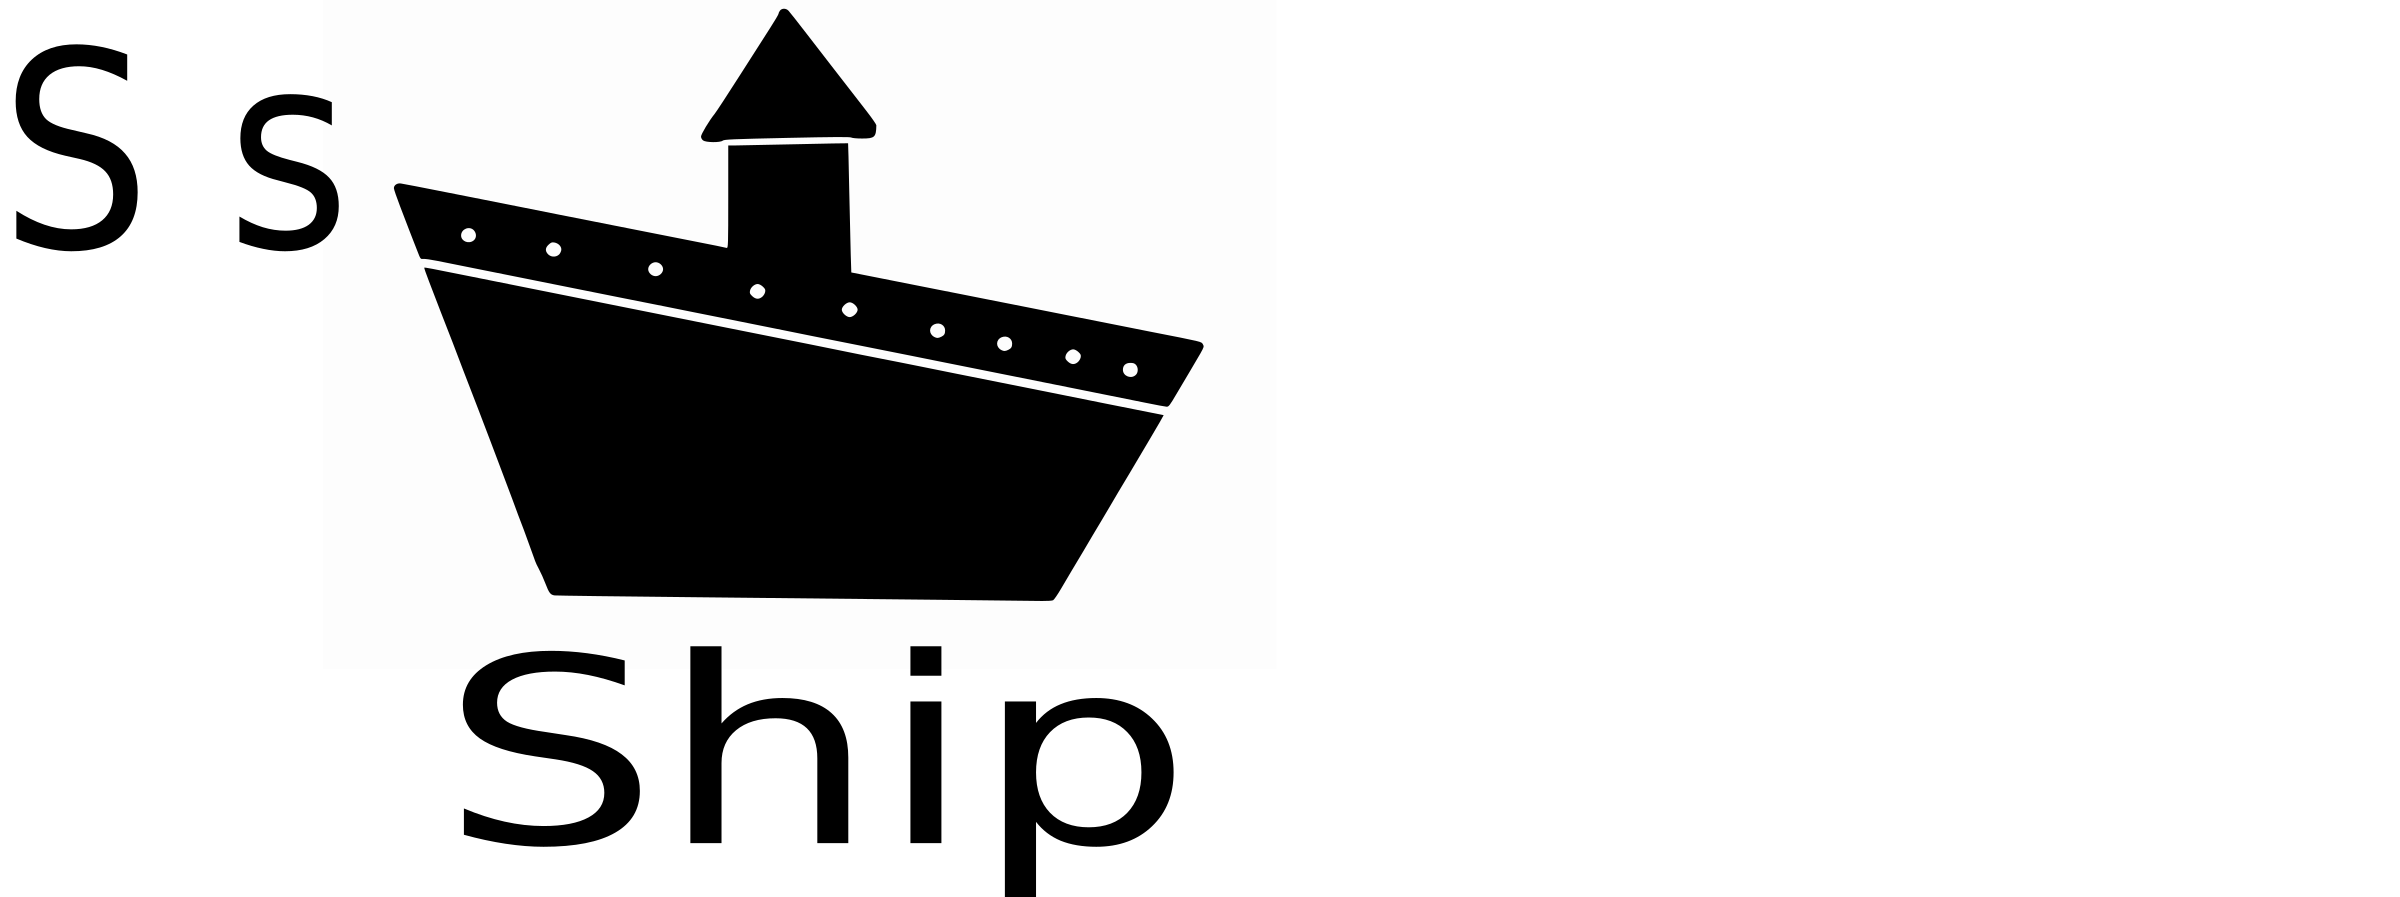 S for Ship SVG Clip arts